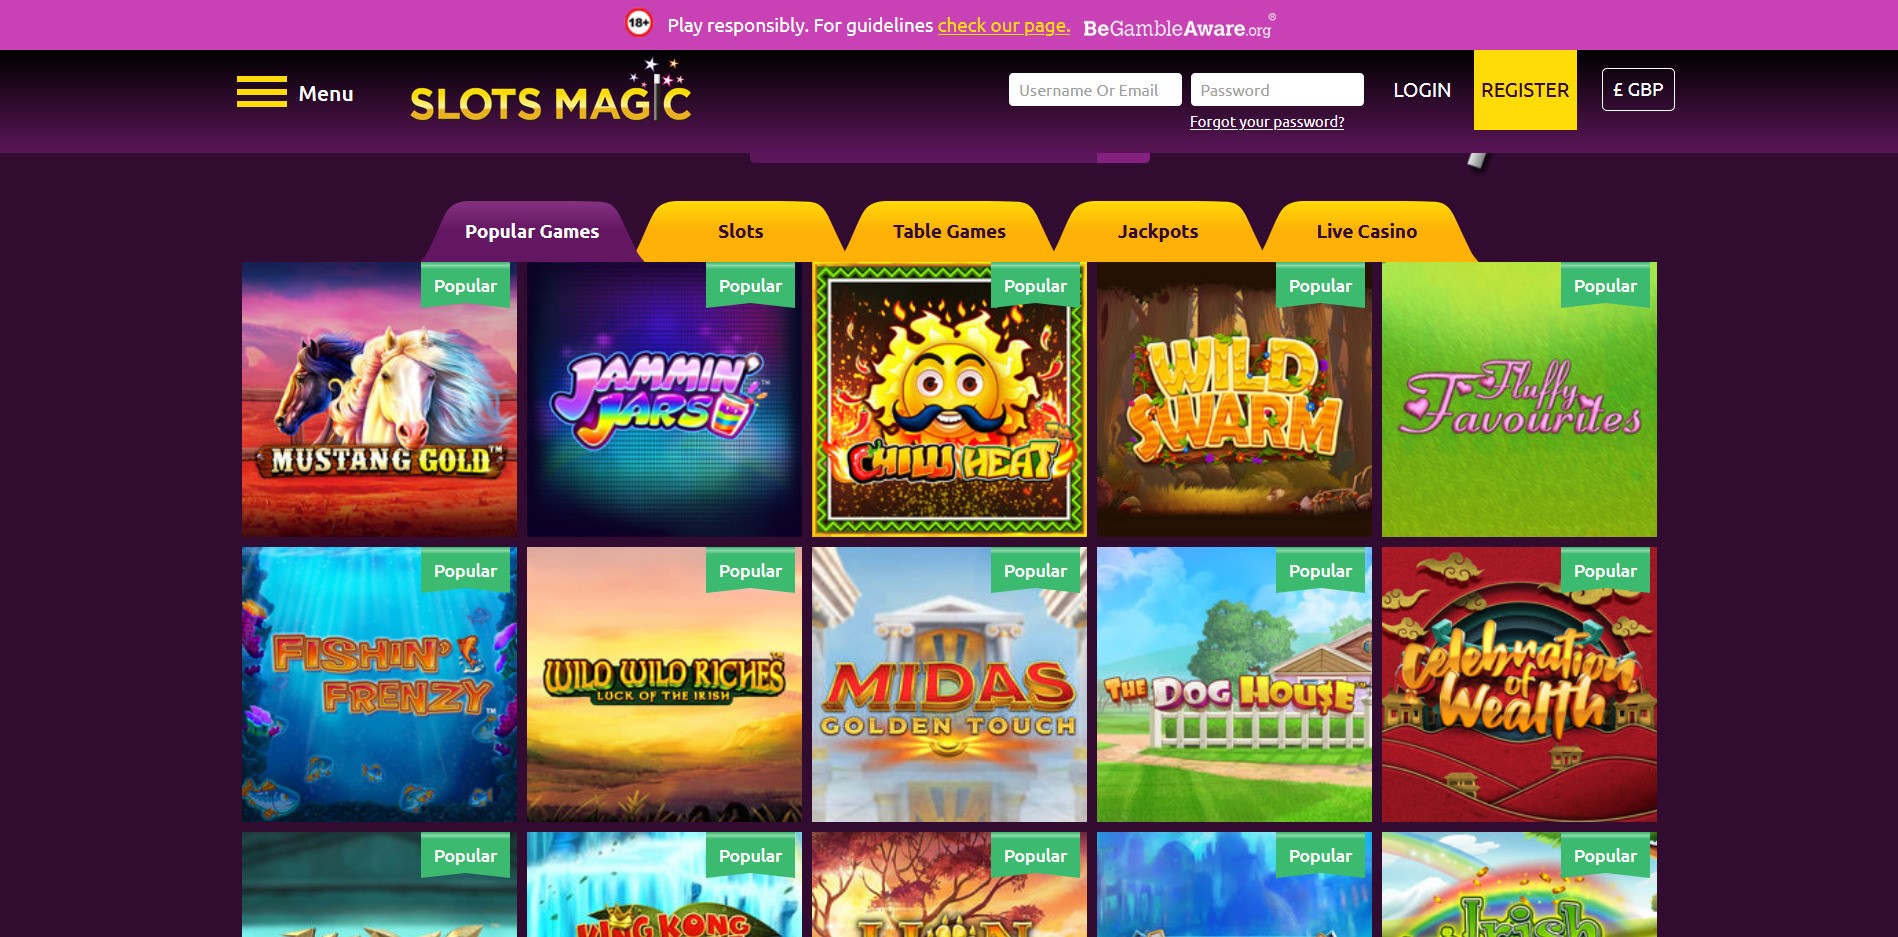 Slots Magic Casino Games